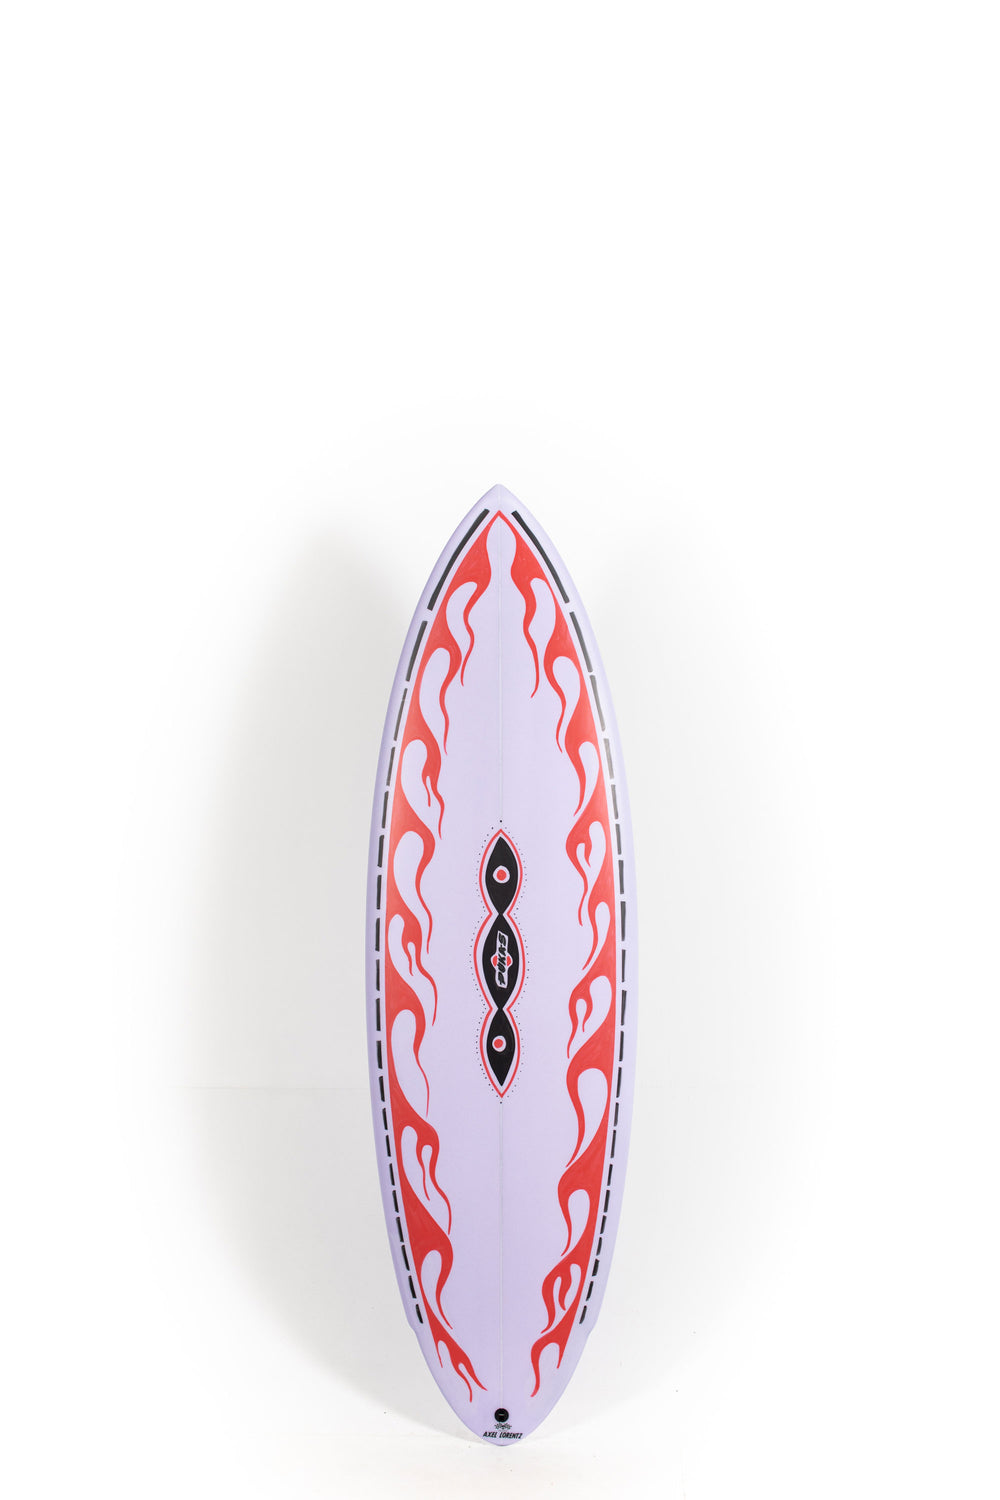 Pukas Surf Shop - Pukas Surfboards - ACID PLAN by Axel Lorentz -  5'11